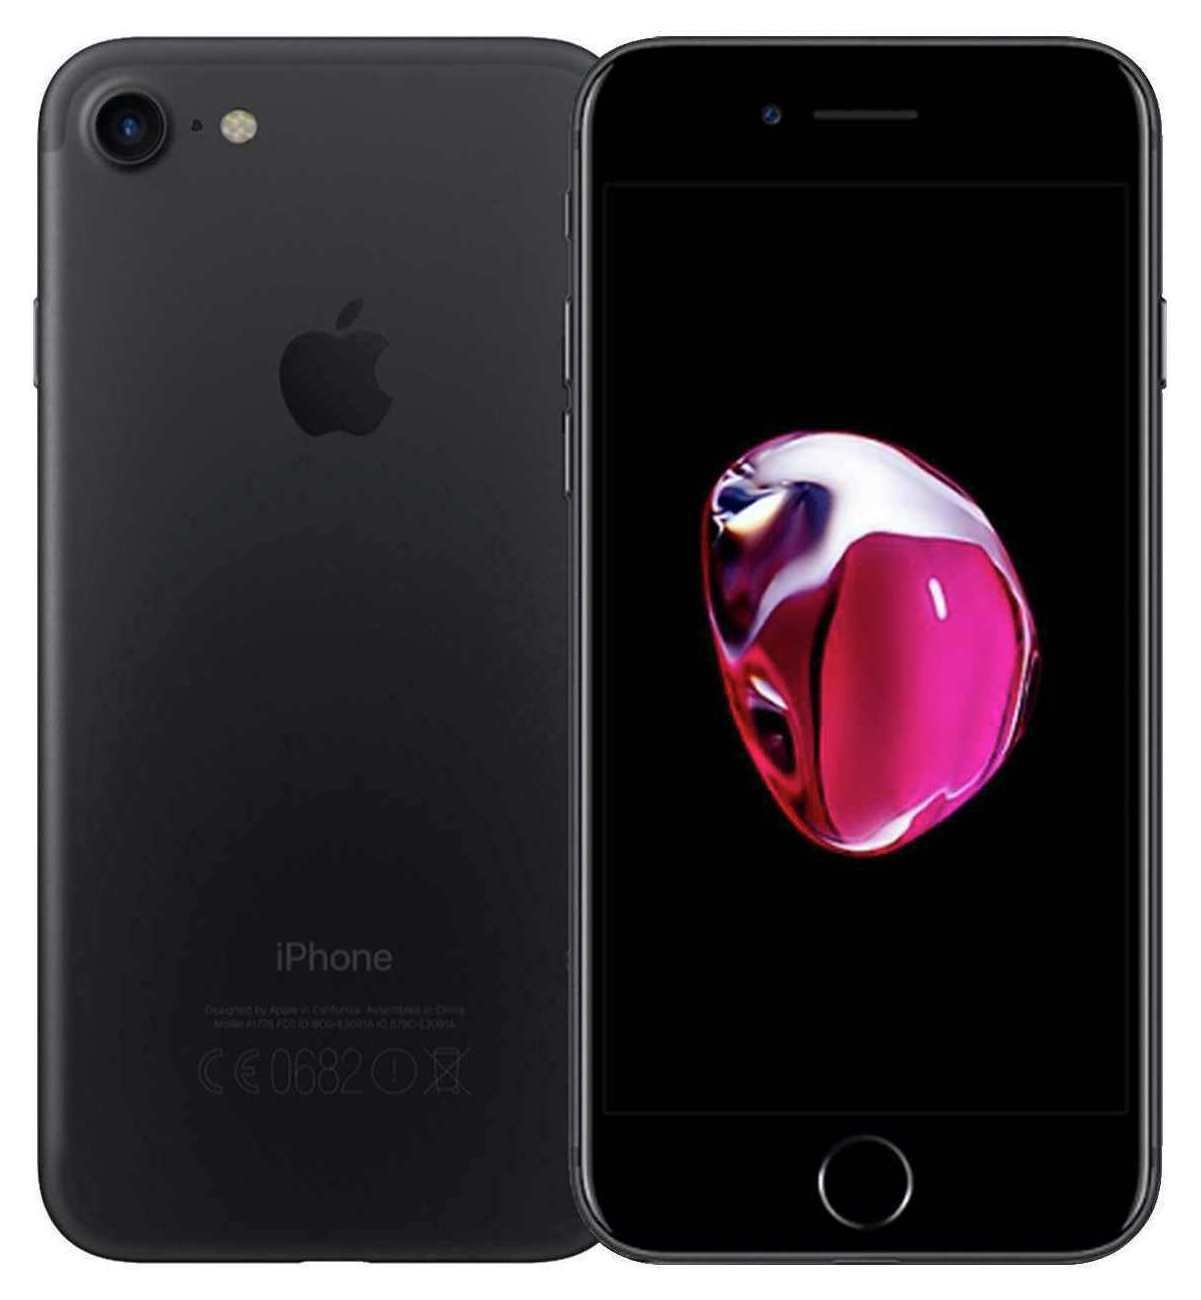 SIM Free Refurbished iPhone 7 Plus 32GB Mobile Phone - Black